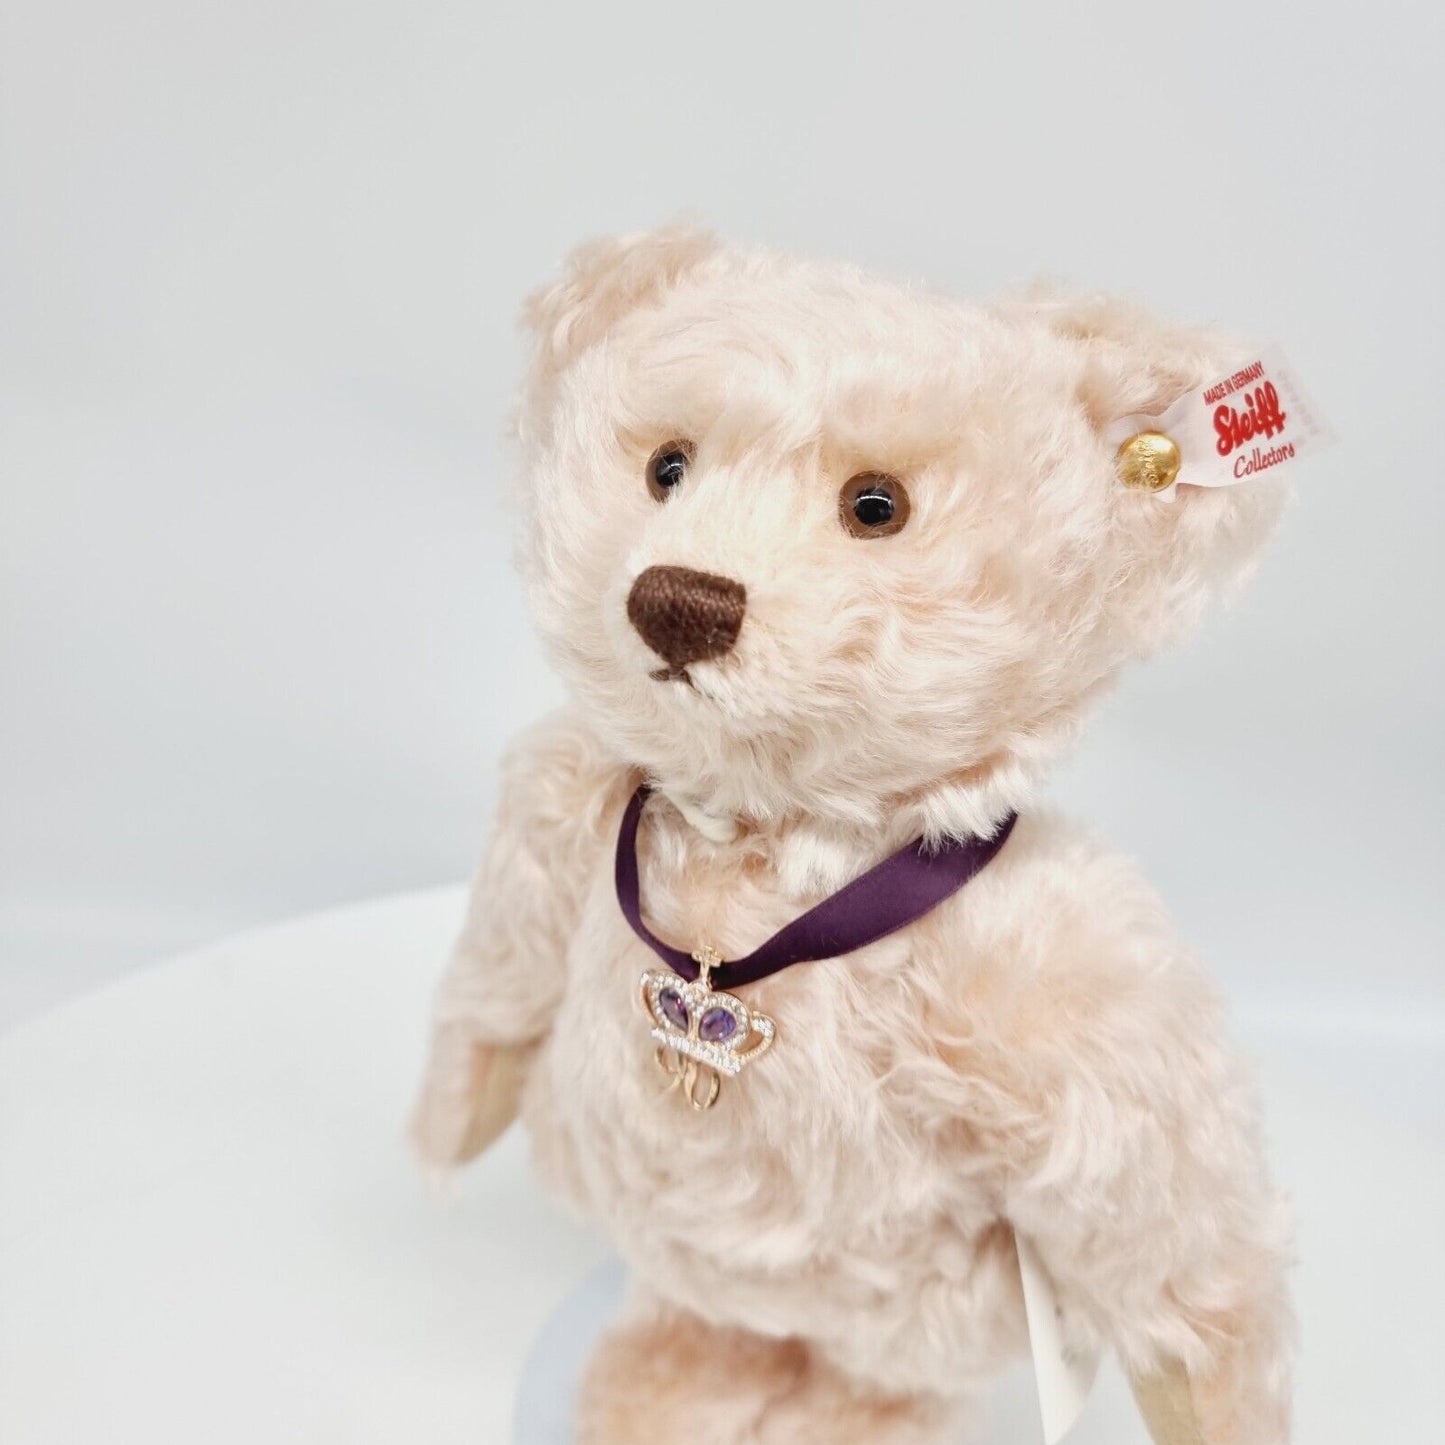 Steiff Teddybär Queen Elizabeth 90. Geburtstag 664984 limitiert 2016 28 cm